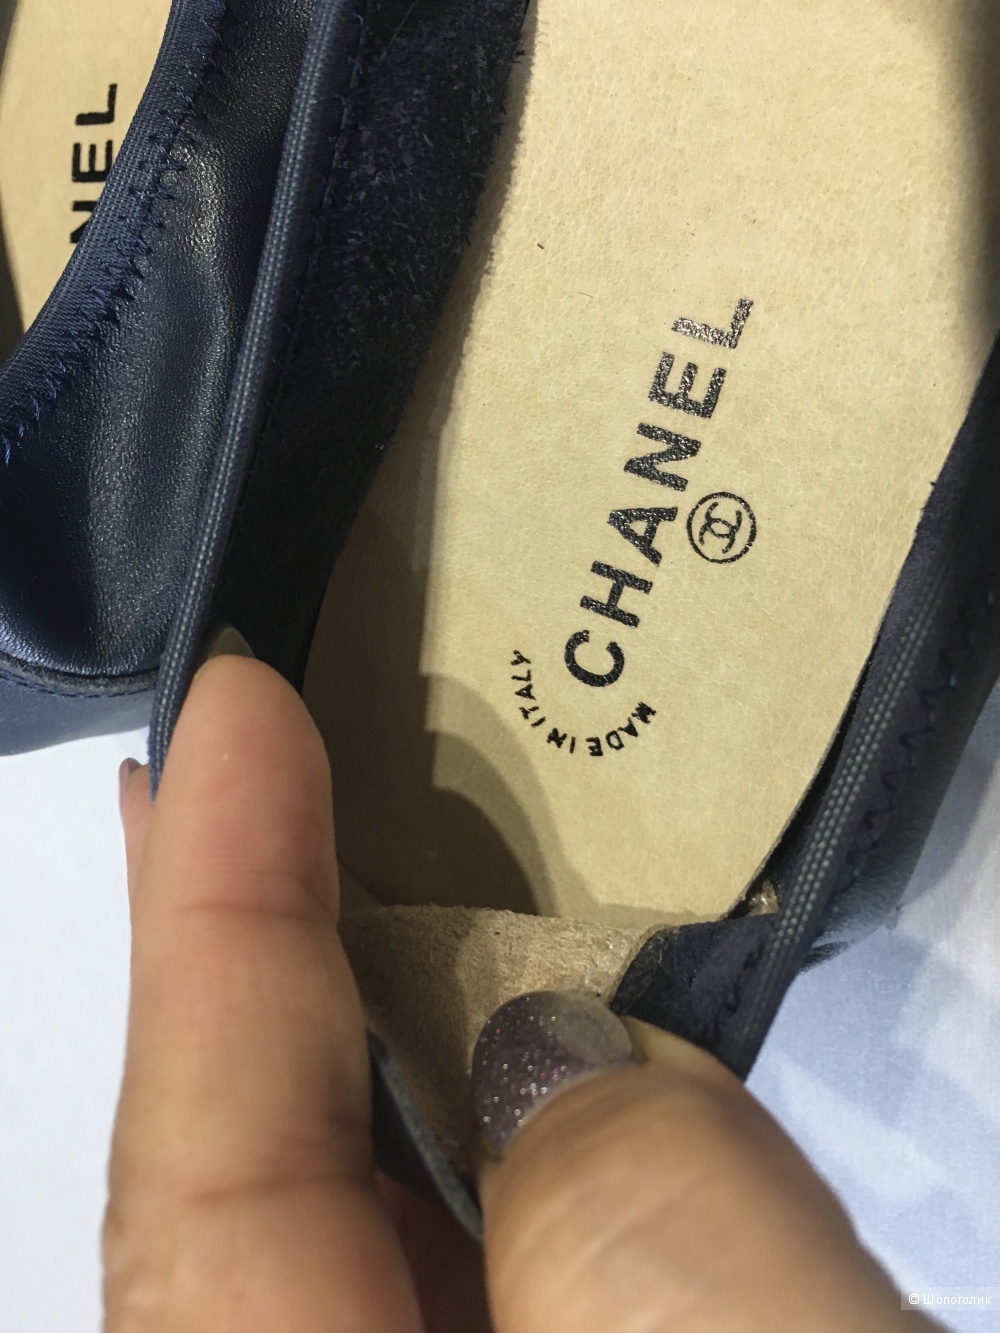 Балетки Chanel, размер 39. По стельке 24,5 см